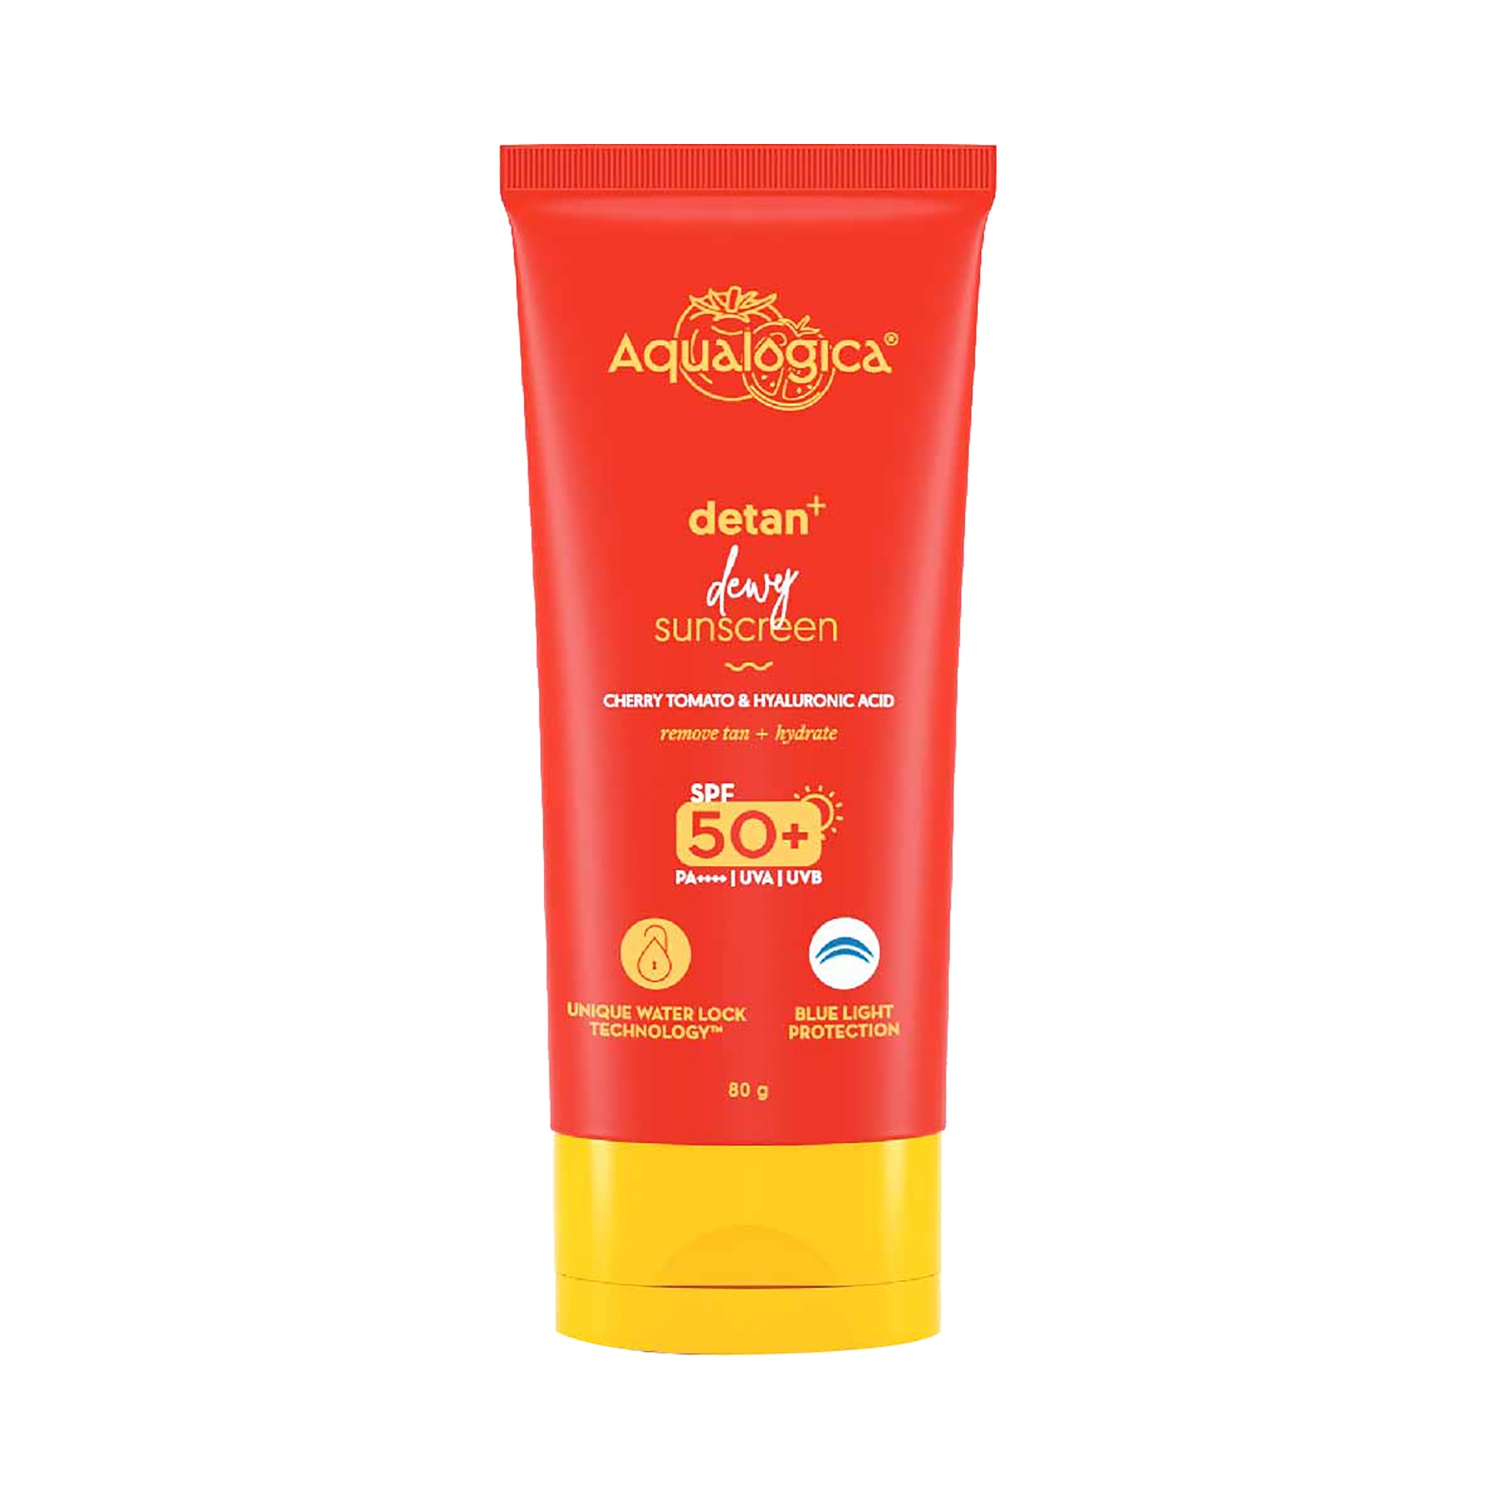 Aqualogica | Aqualogica Detan+ Dewy Sunscreen SPF 50 PA++++ With Cherry Tomato & Hyaluronic Acid (80g)